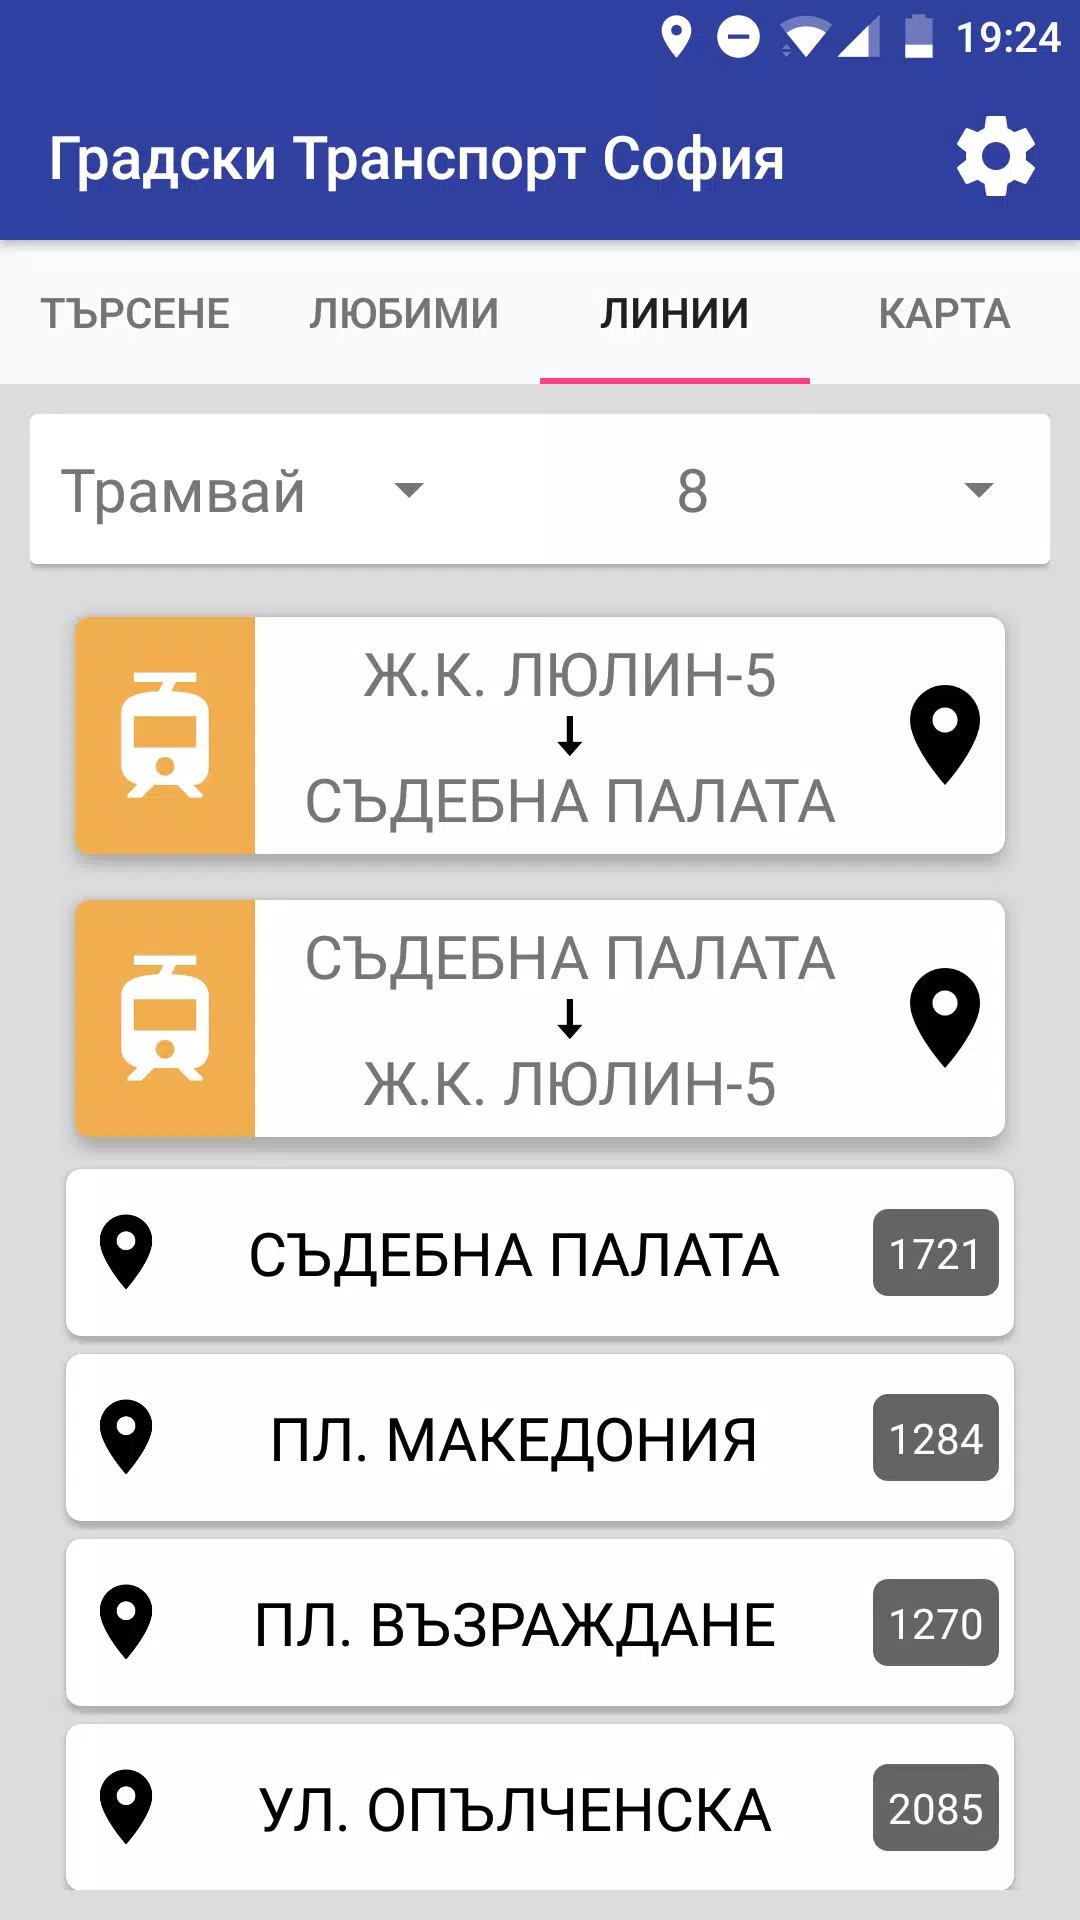 Градски Транспорт София APK untuk Unduhan Android